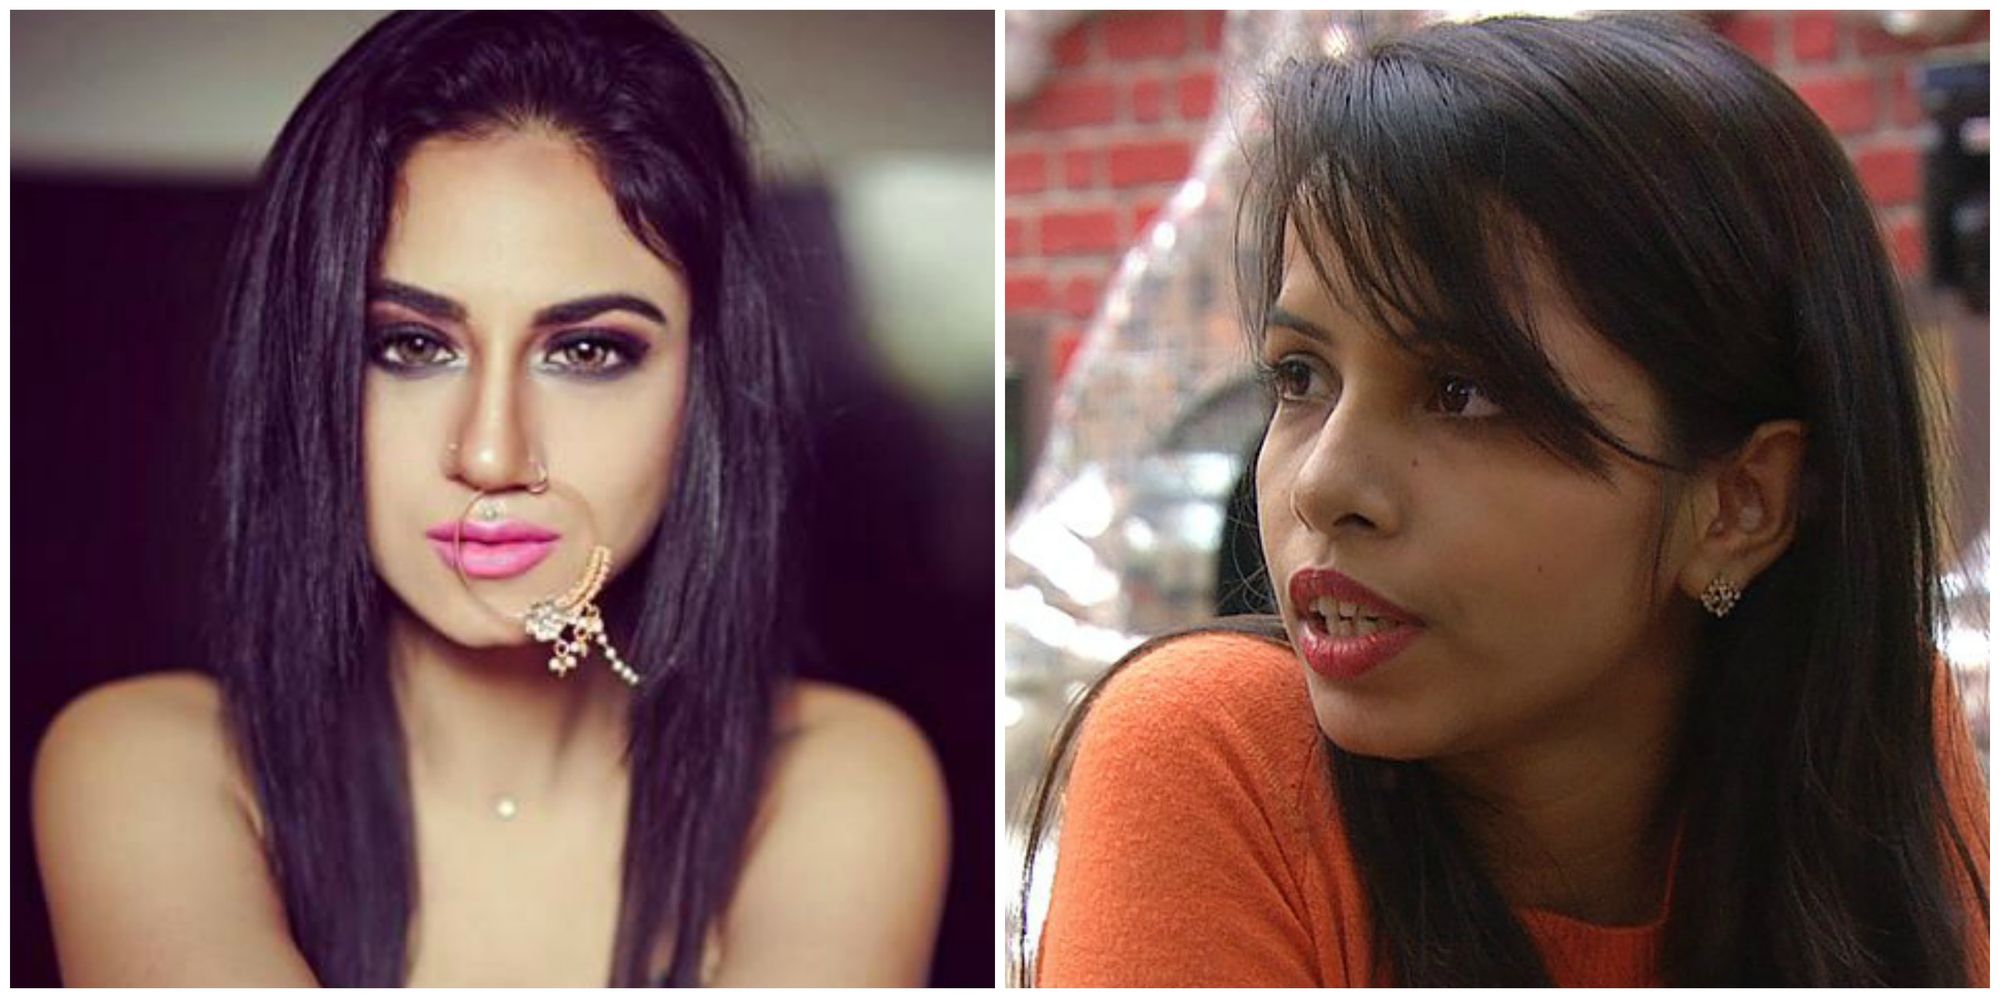 Bigg Boss 11: Priya Malik’s Take On Dhinchak Pooja Is Rather Unexpected